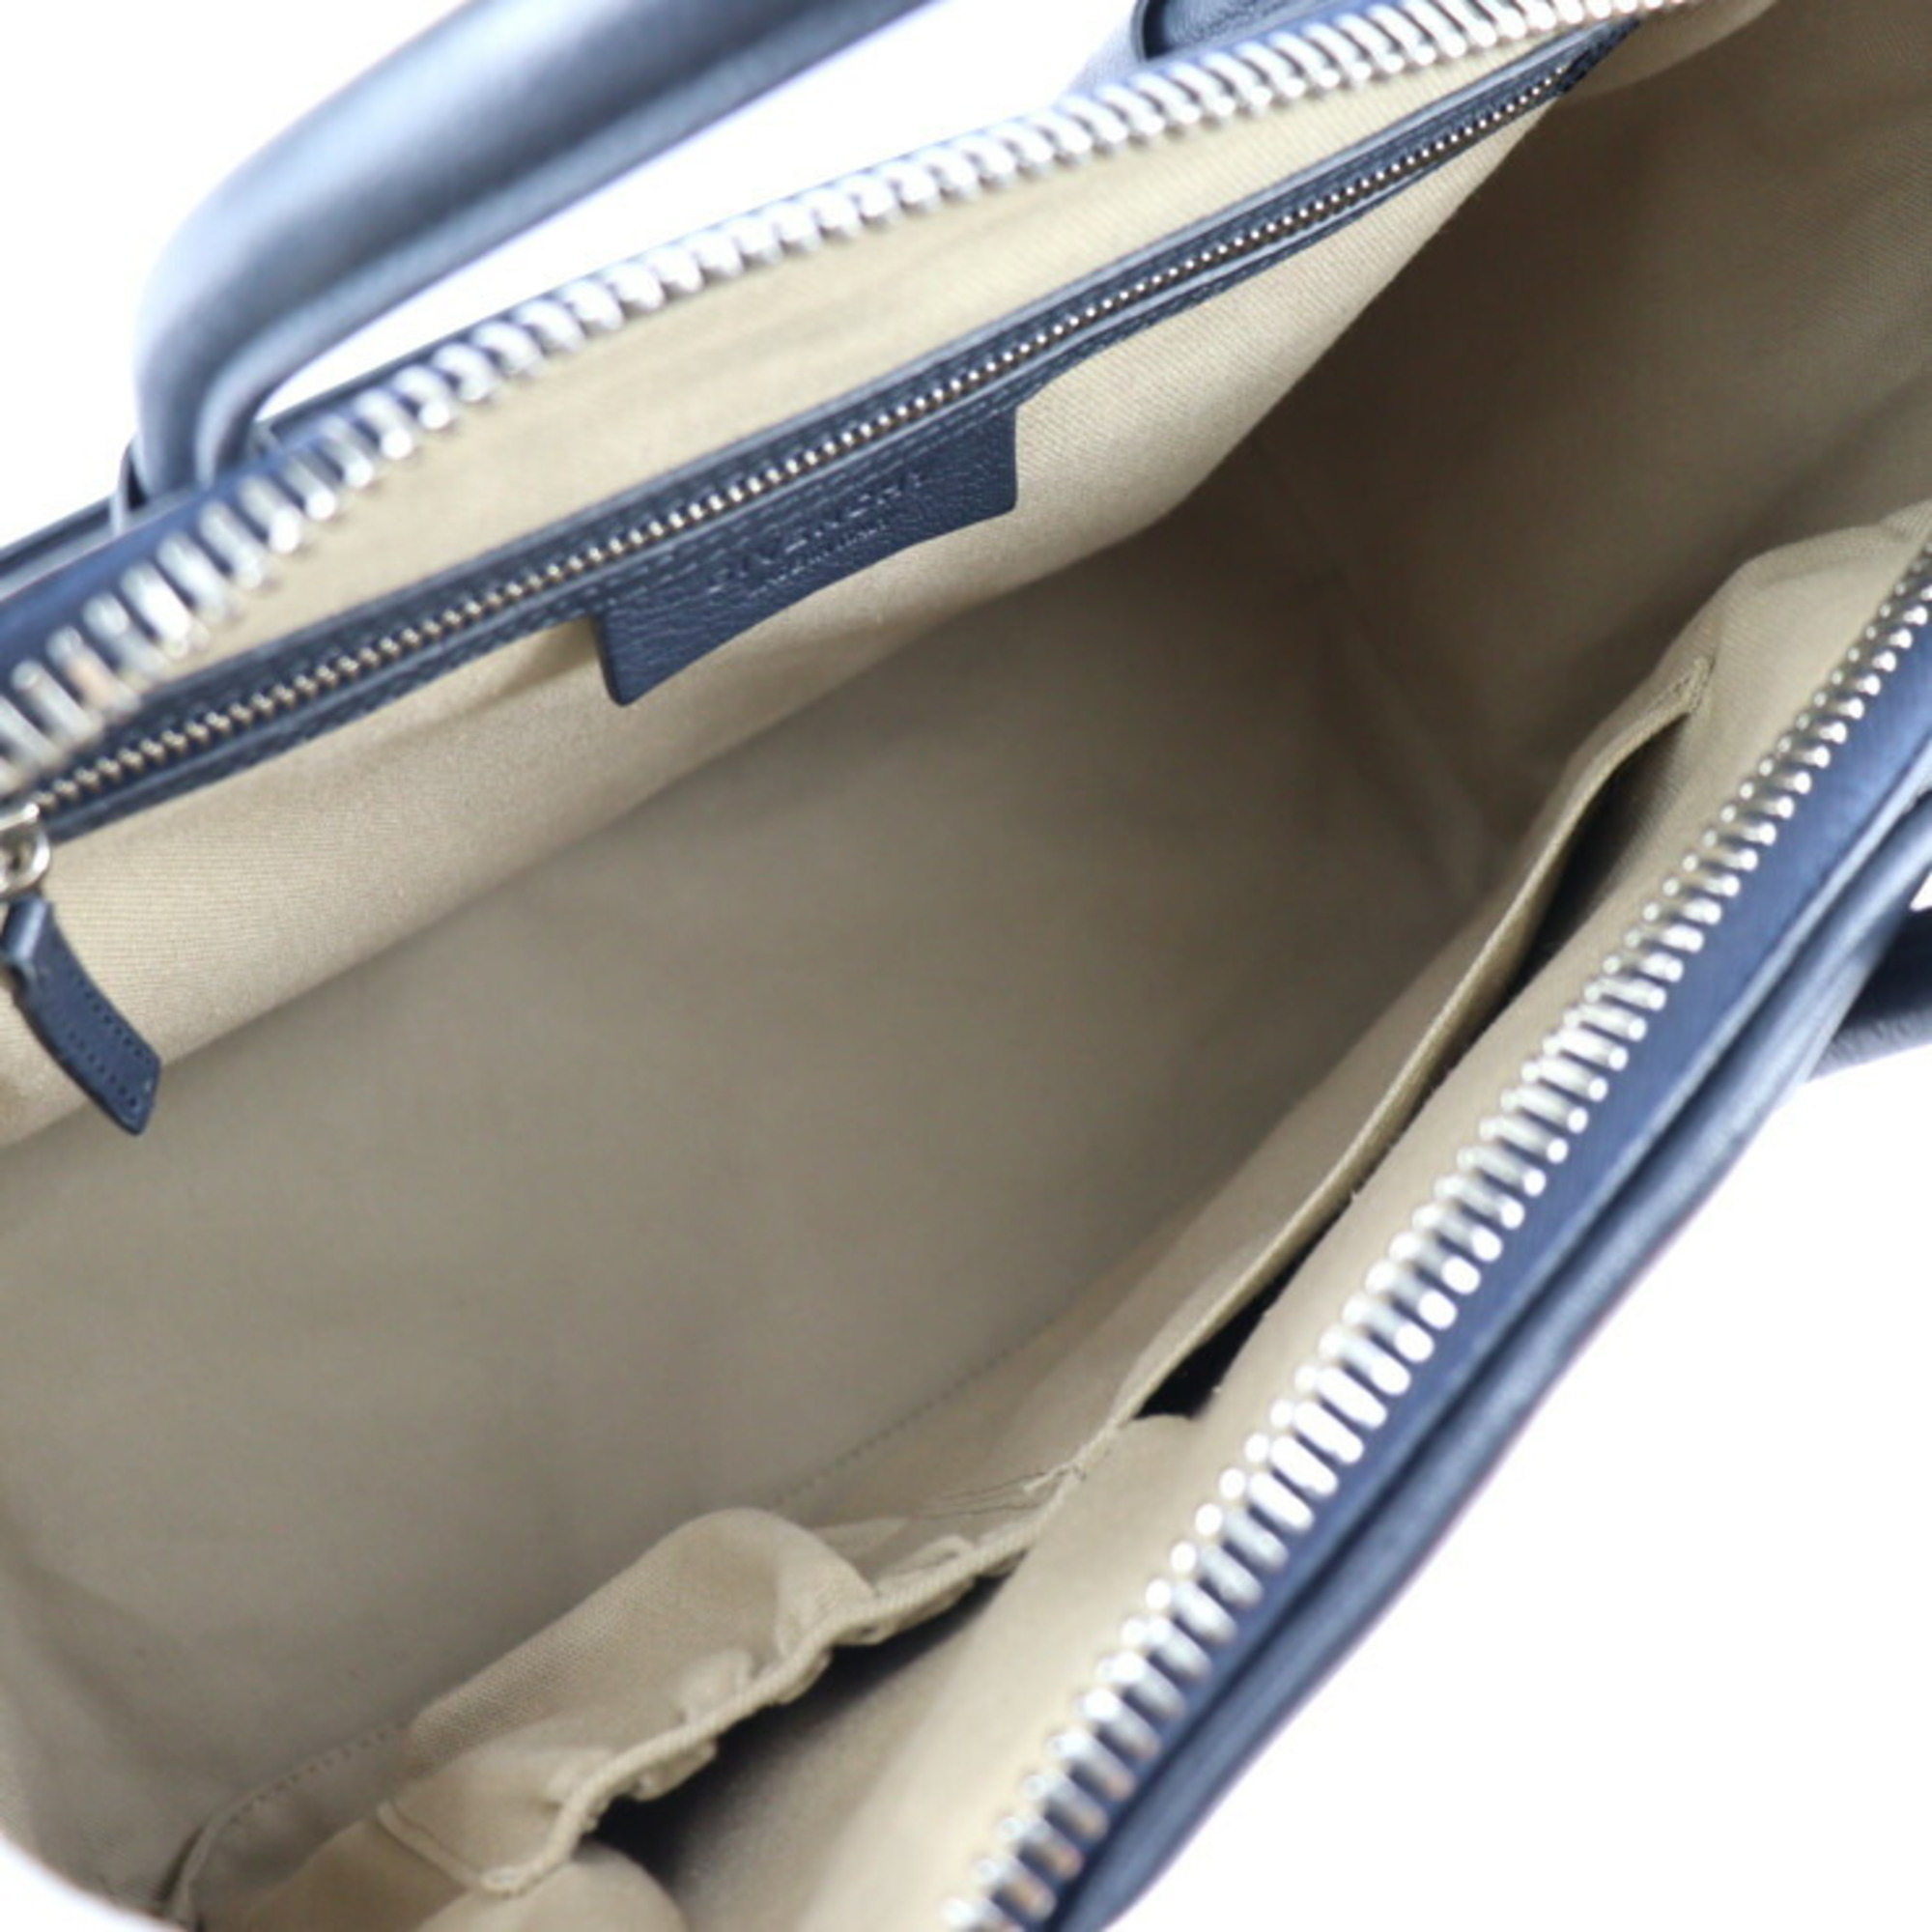 GIVENCHY Antigona Medium Handbag BB05118012 Leather Dark Navy 2WAY Shoulder Bag M Size